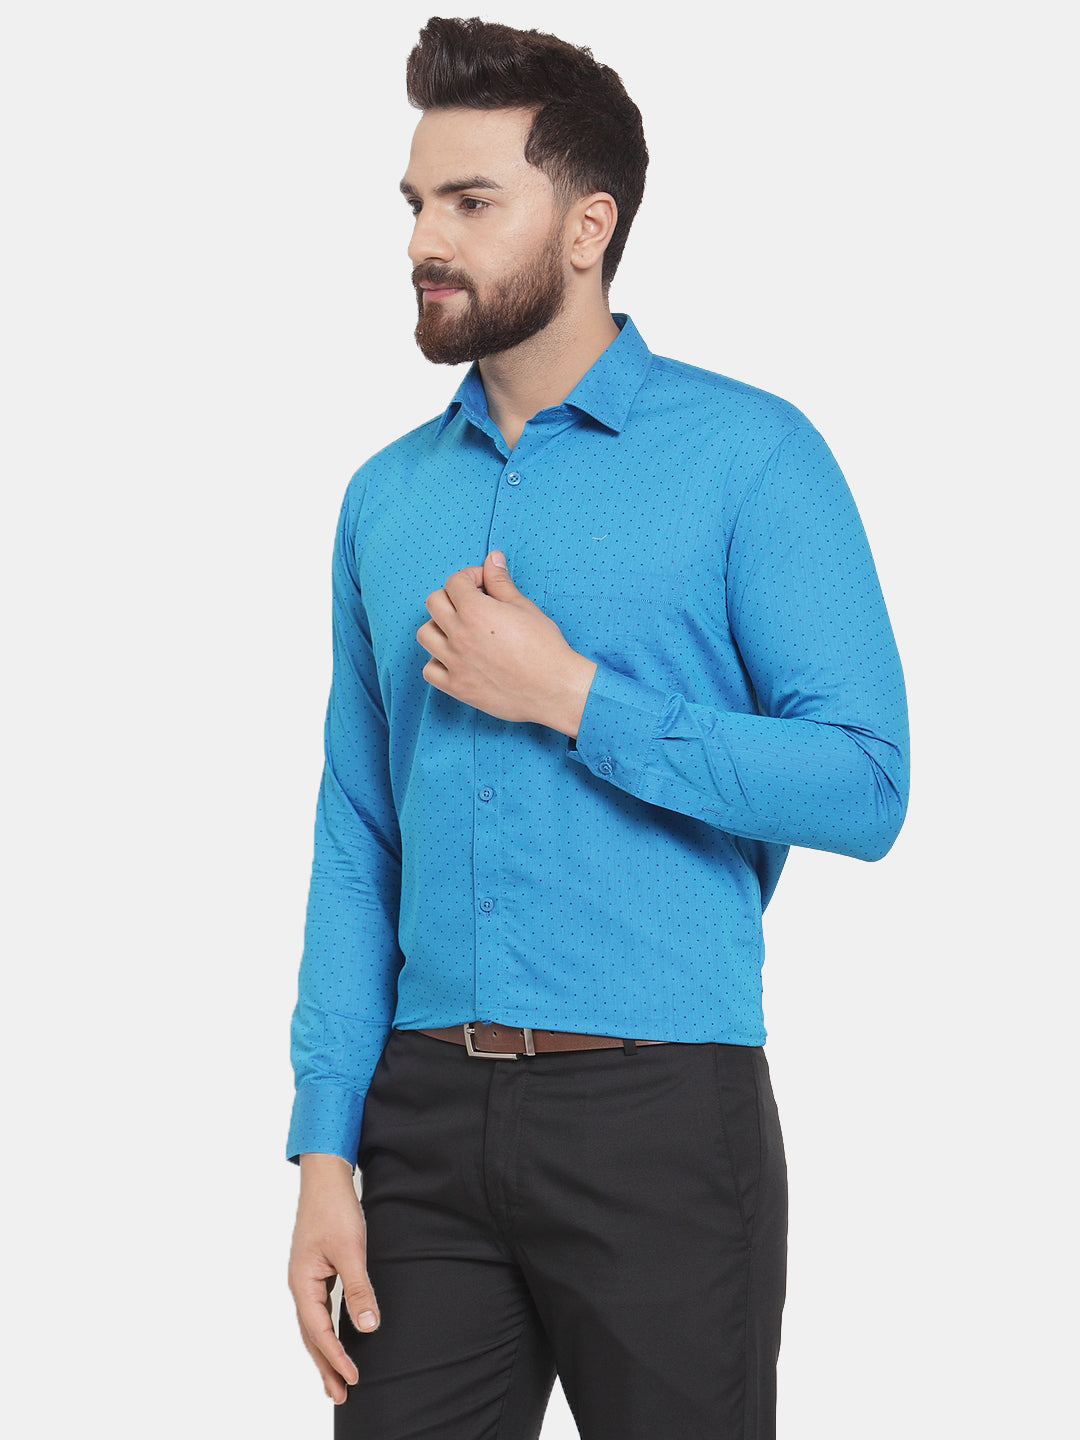 Men's Blue Cotton Polka Dots Formal Shirts ( SF 739Sky ) - Jainish